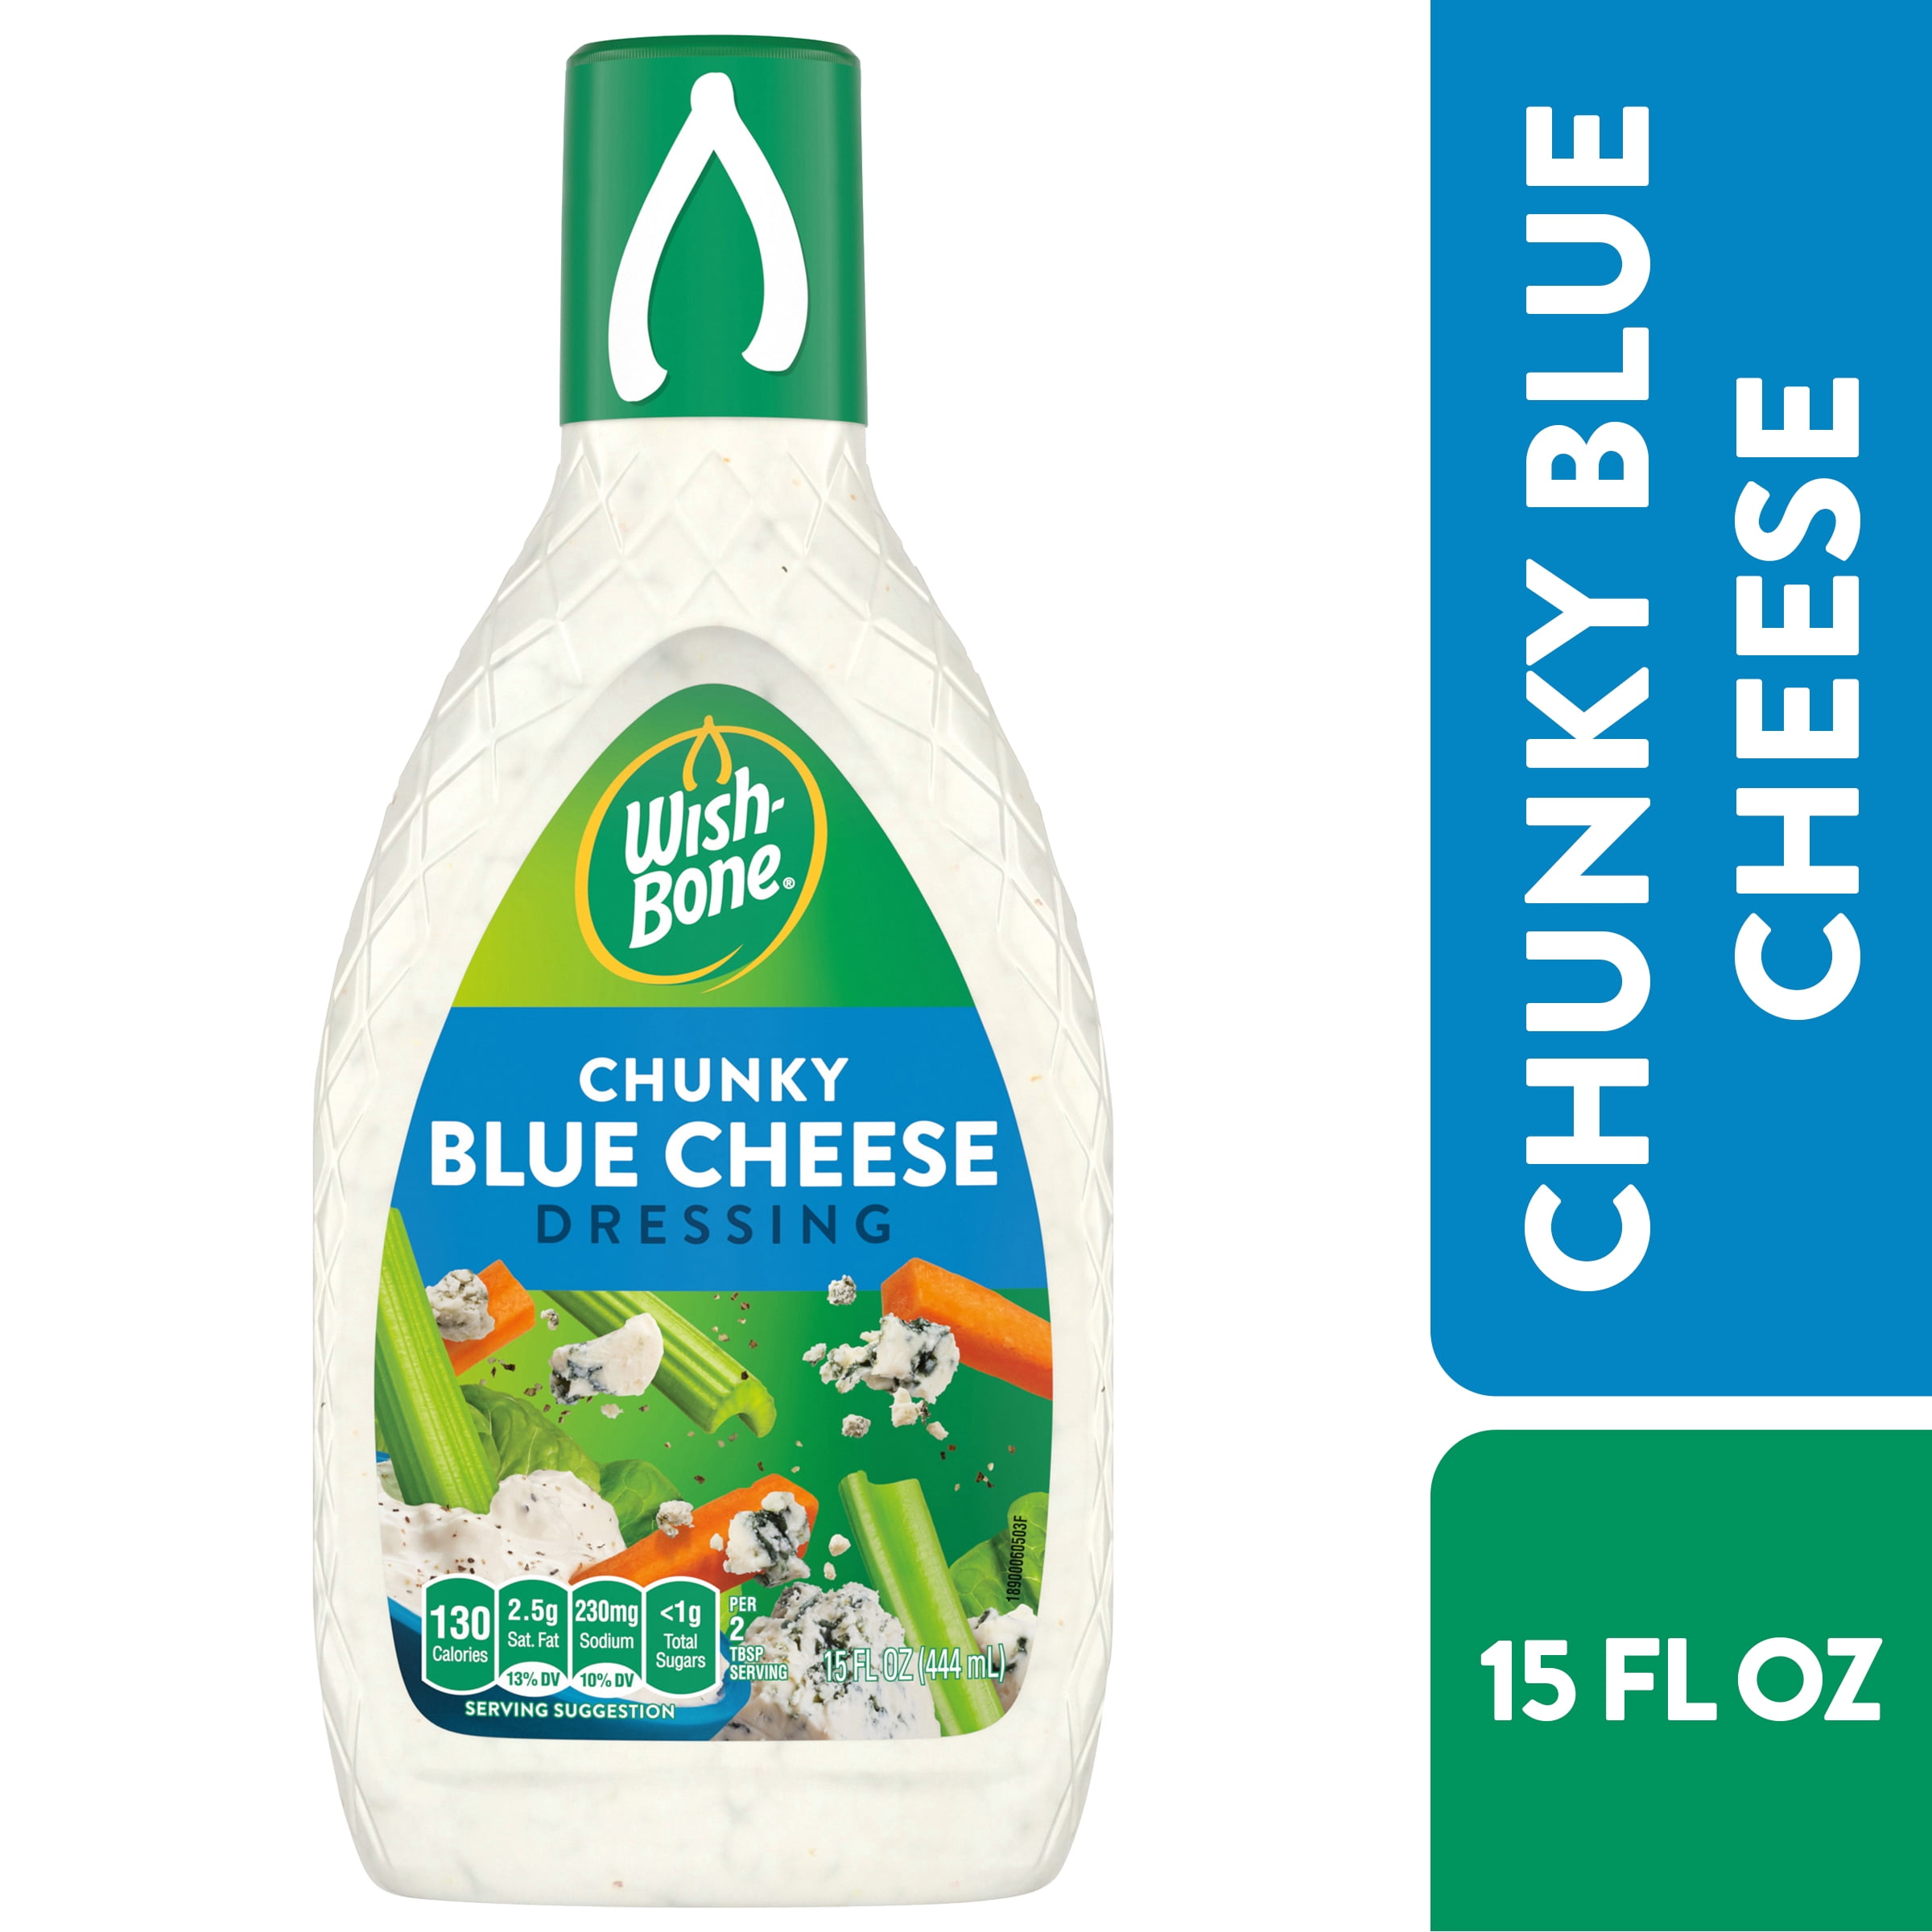 Wish-Bone Chunky Blue Cheese Dressing, 15 FL OZ